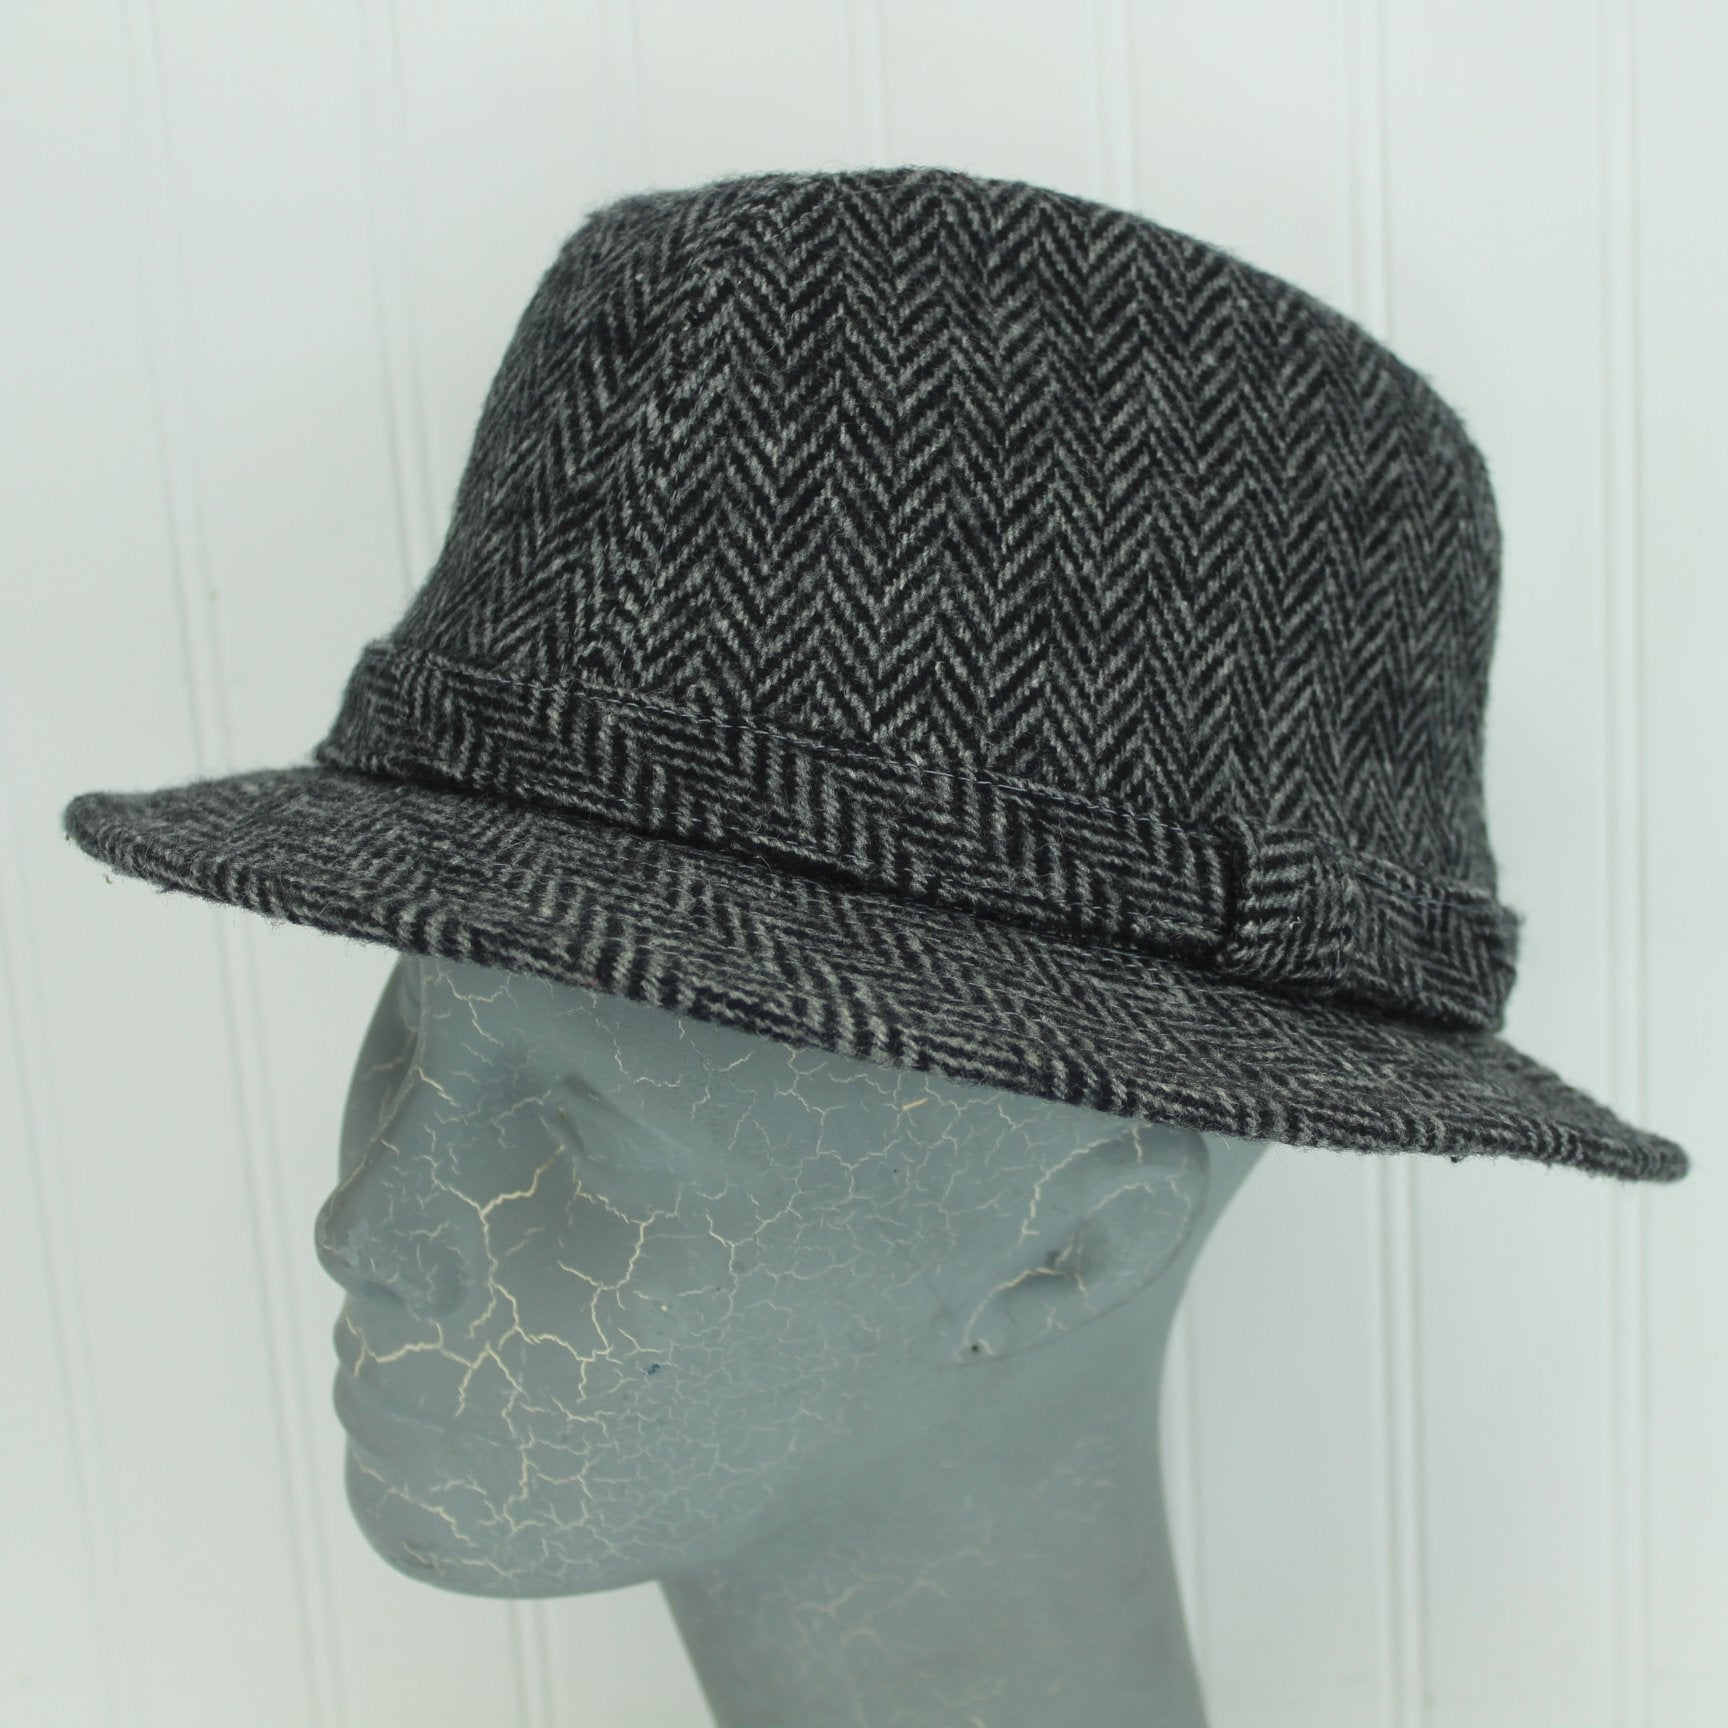 Dorfman Pacific Scala Hat Black Grey Herringbone Wool Blend closeup